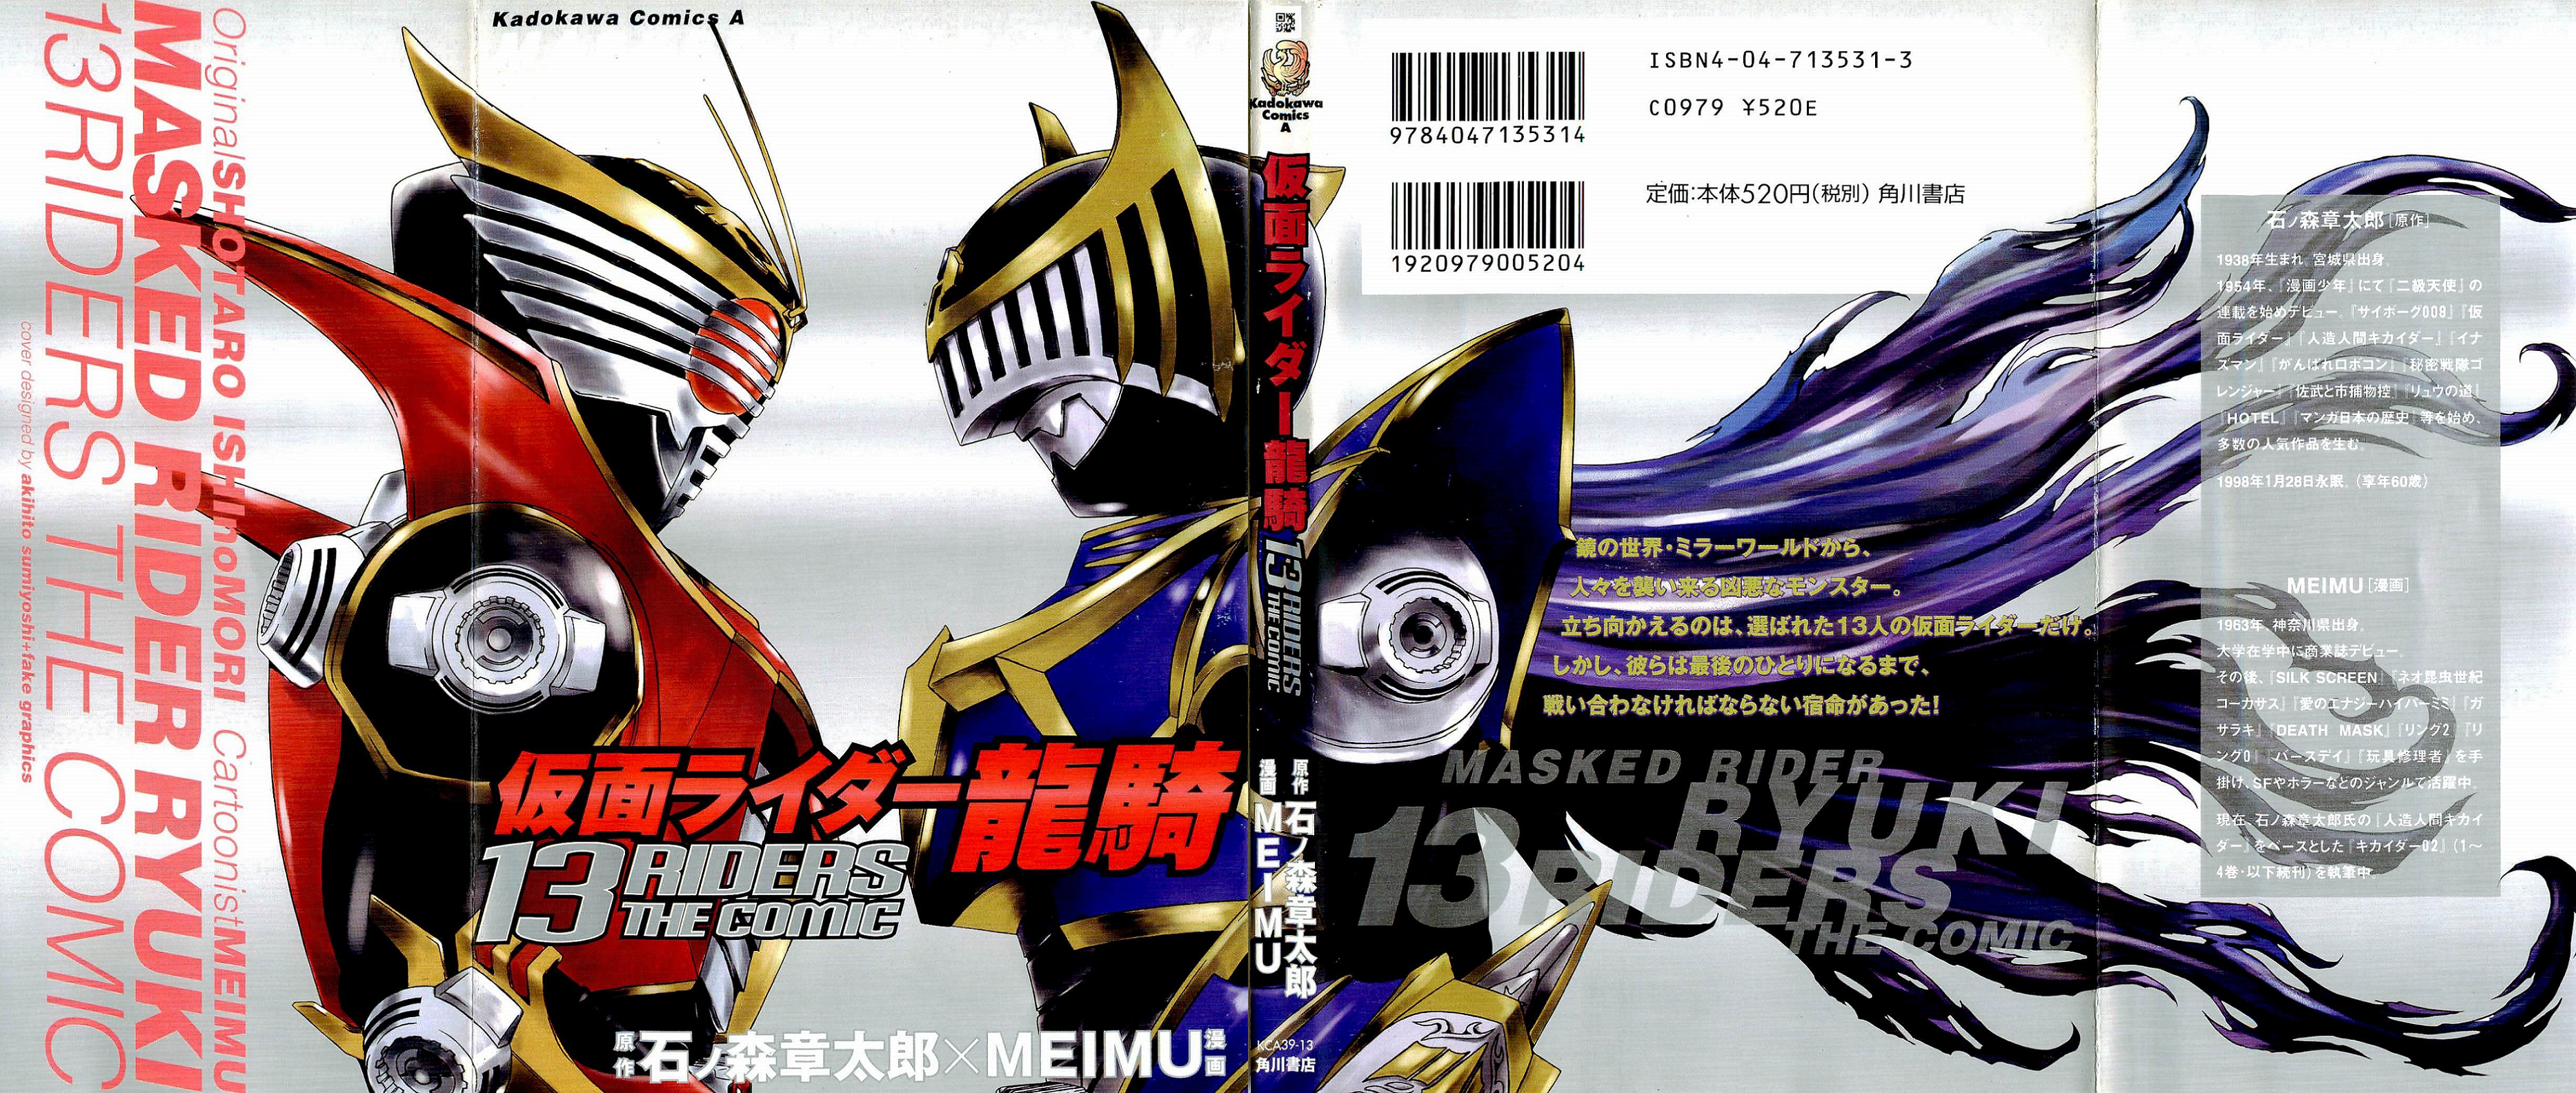 Kamen Rider Ryuki 13 Riders The Comic Kamen Rider Wiki Fandom